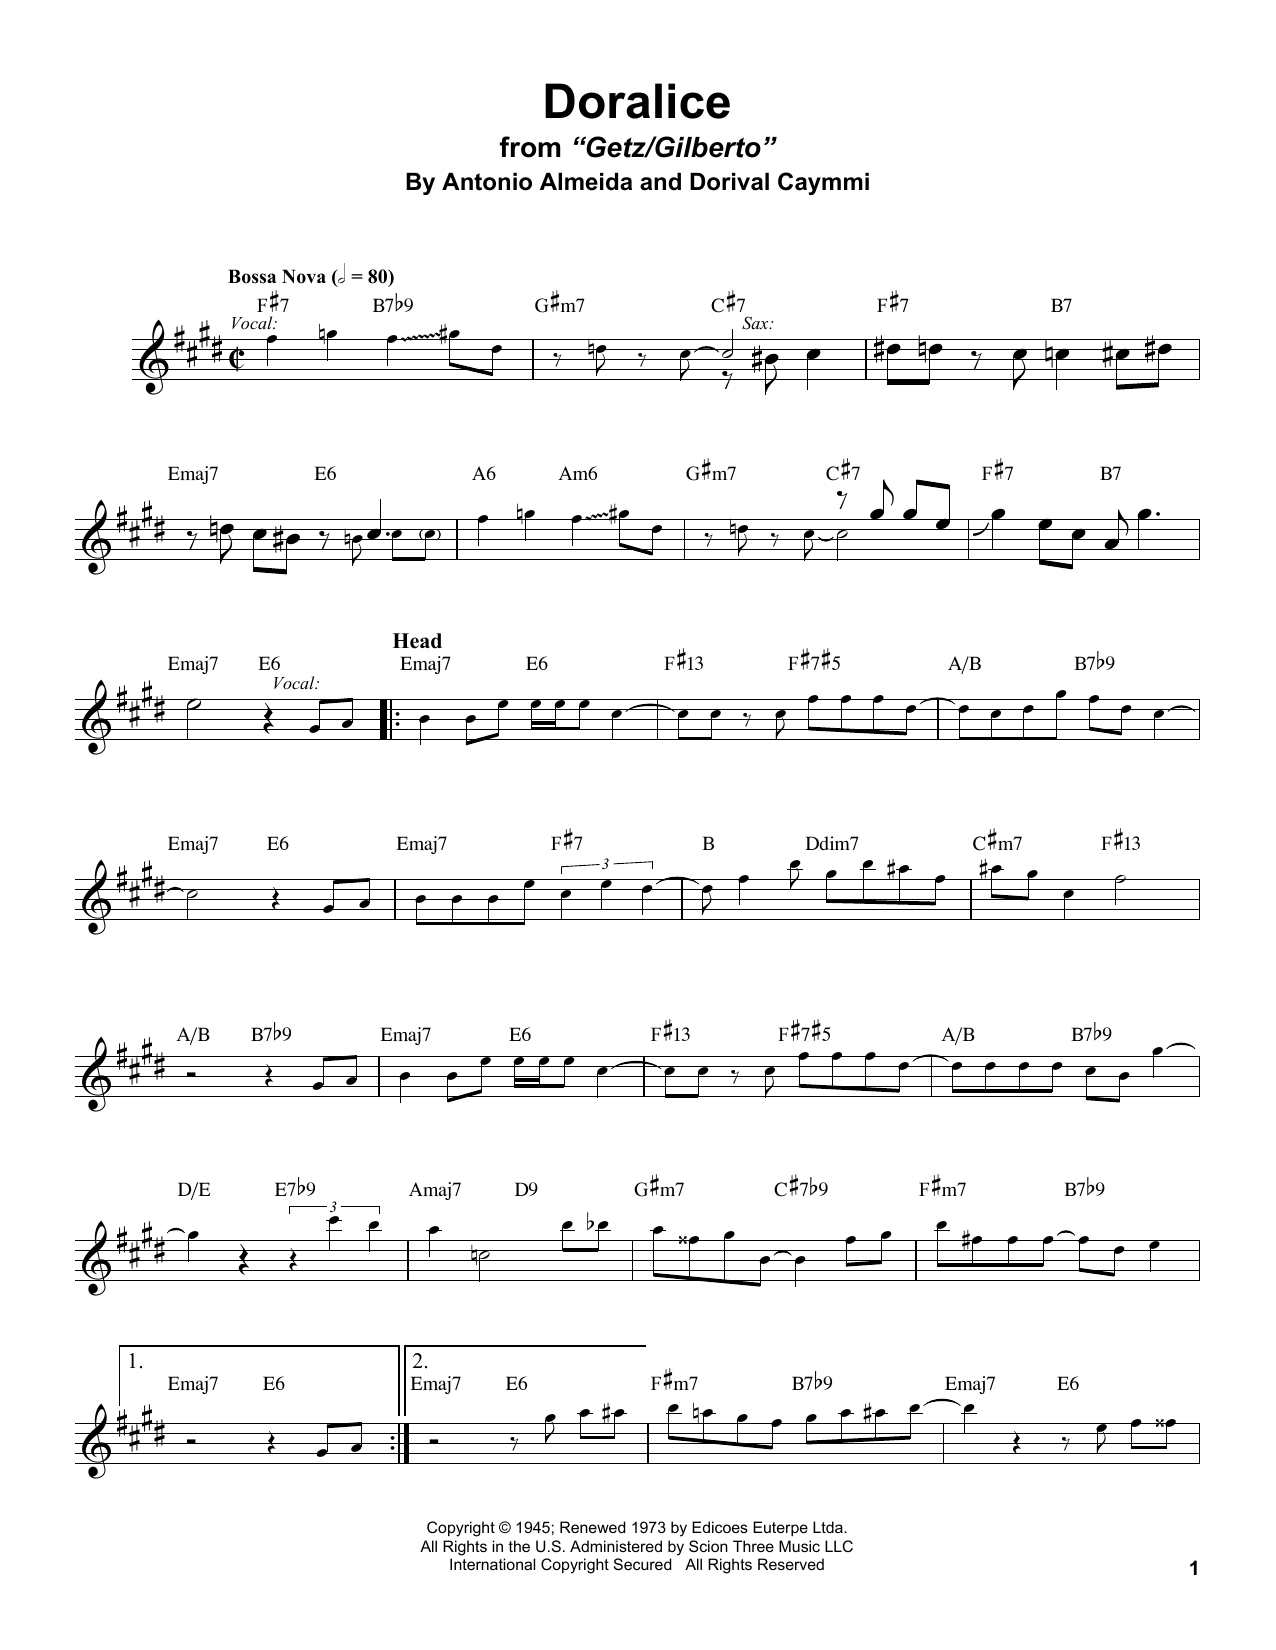 Stan Getz Doralice Sheet Music Notes & Chords for Alto Sax Transcription - Download or Print PDF